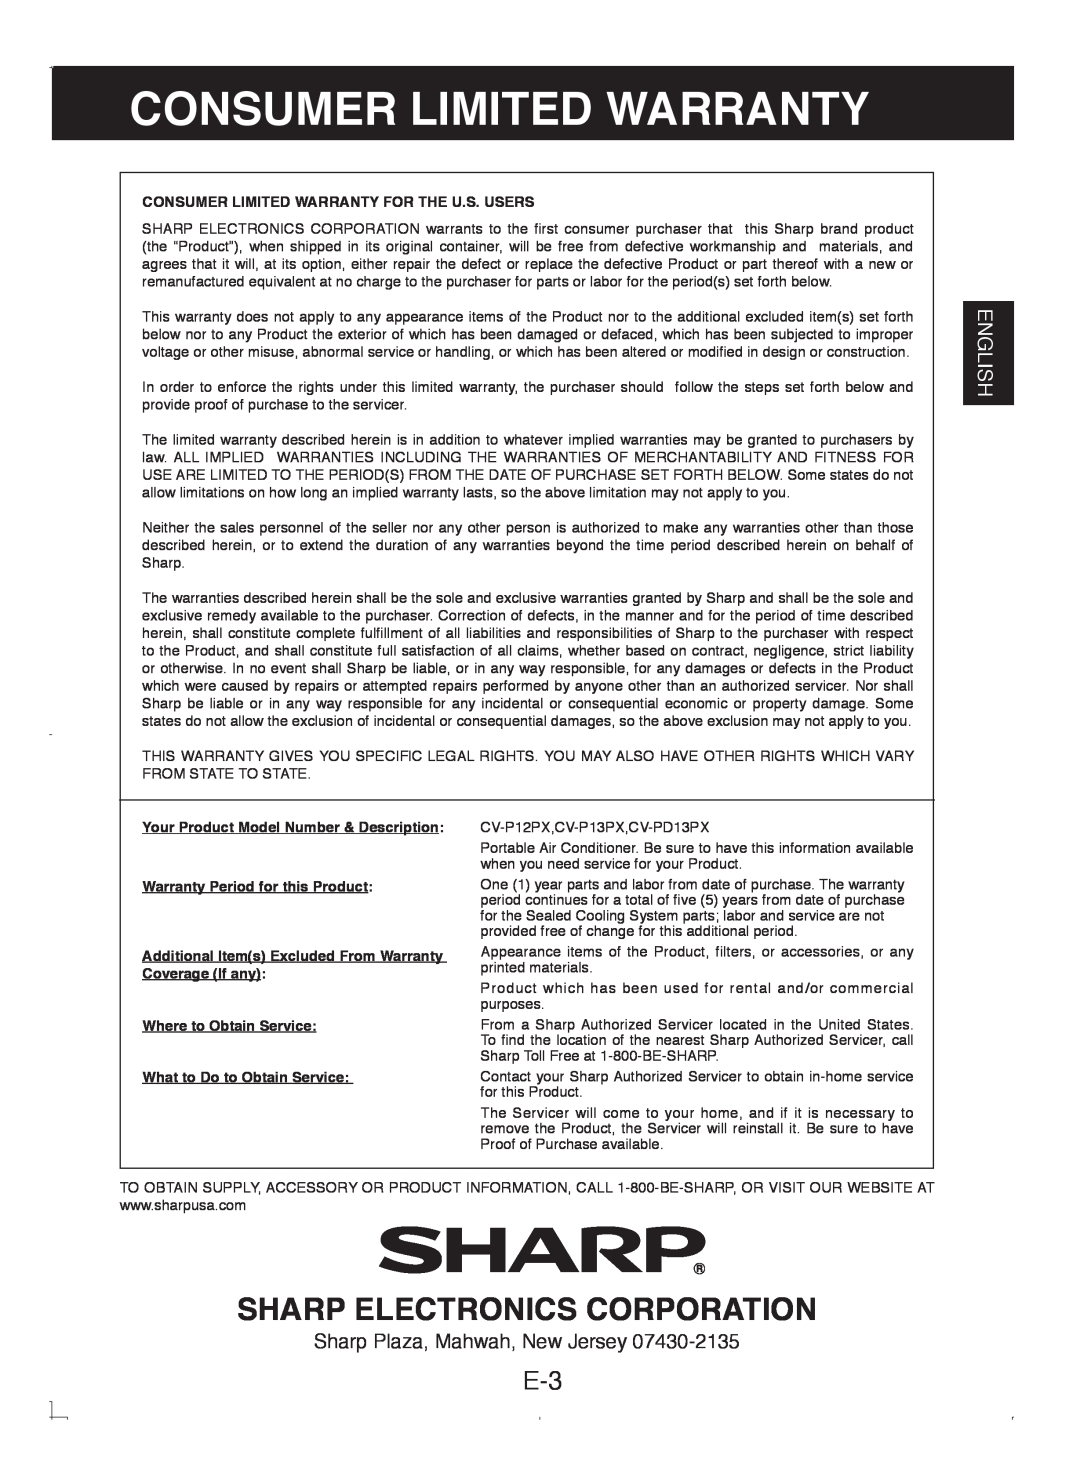 Sony CV-P12PX operation manual Consumer Limited Warranty, Sharp Electronics Corporation, English 